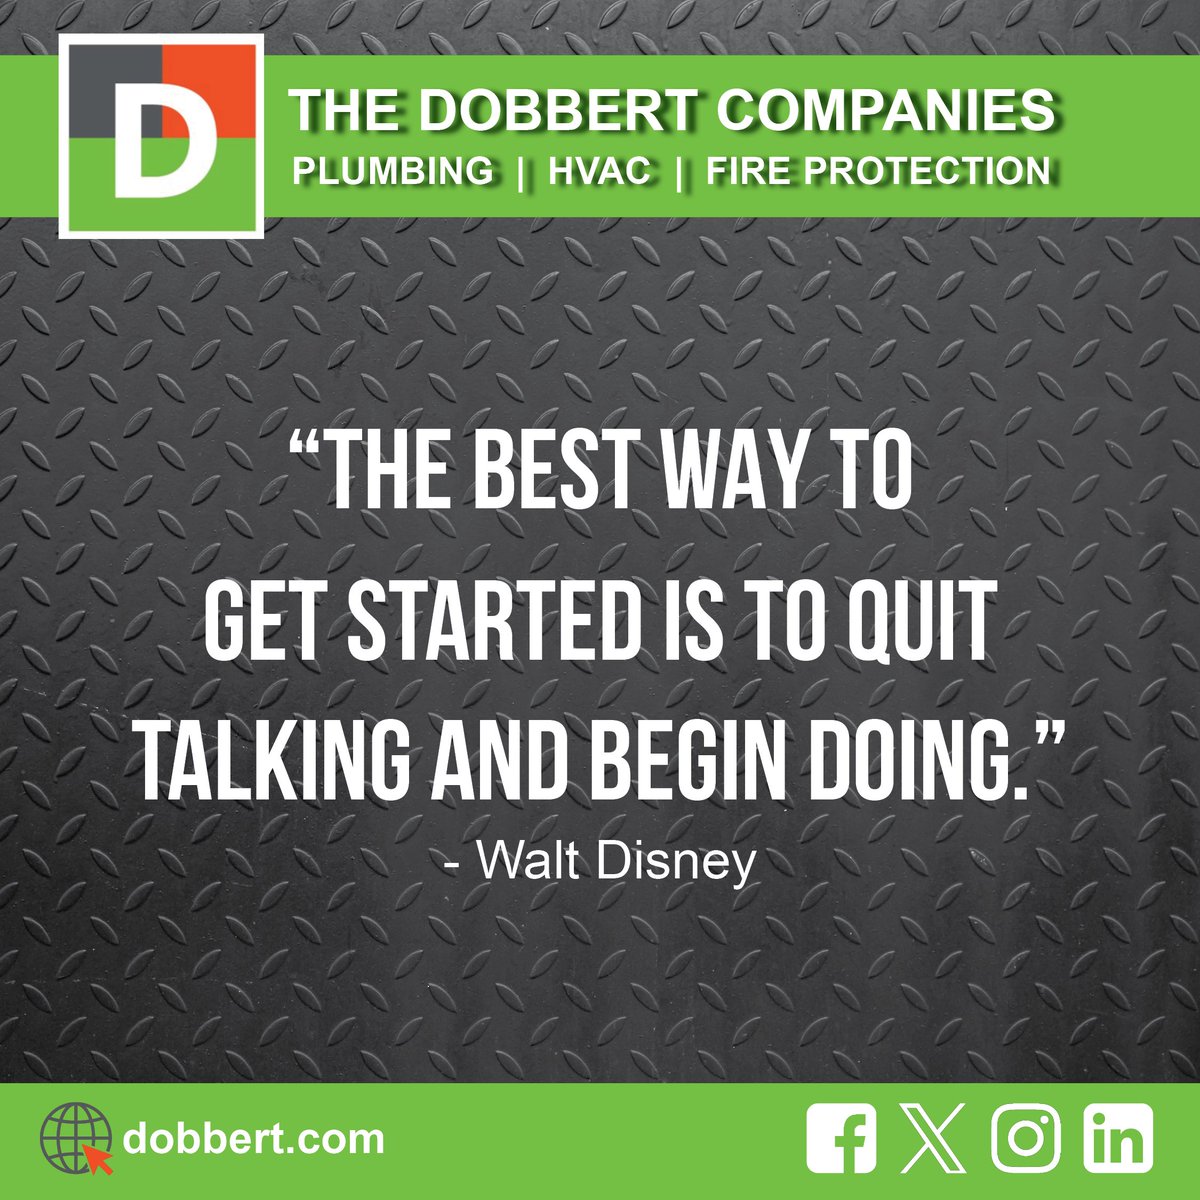 Motivational Monday...

“The best way to get started is to quit talking and begin doing.” - Walt Disney

#dobbert #dobbertcos #HVAC #plumbing #fireprotection #motivation #begindoing